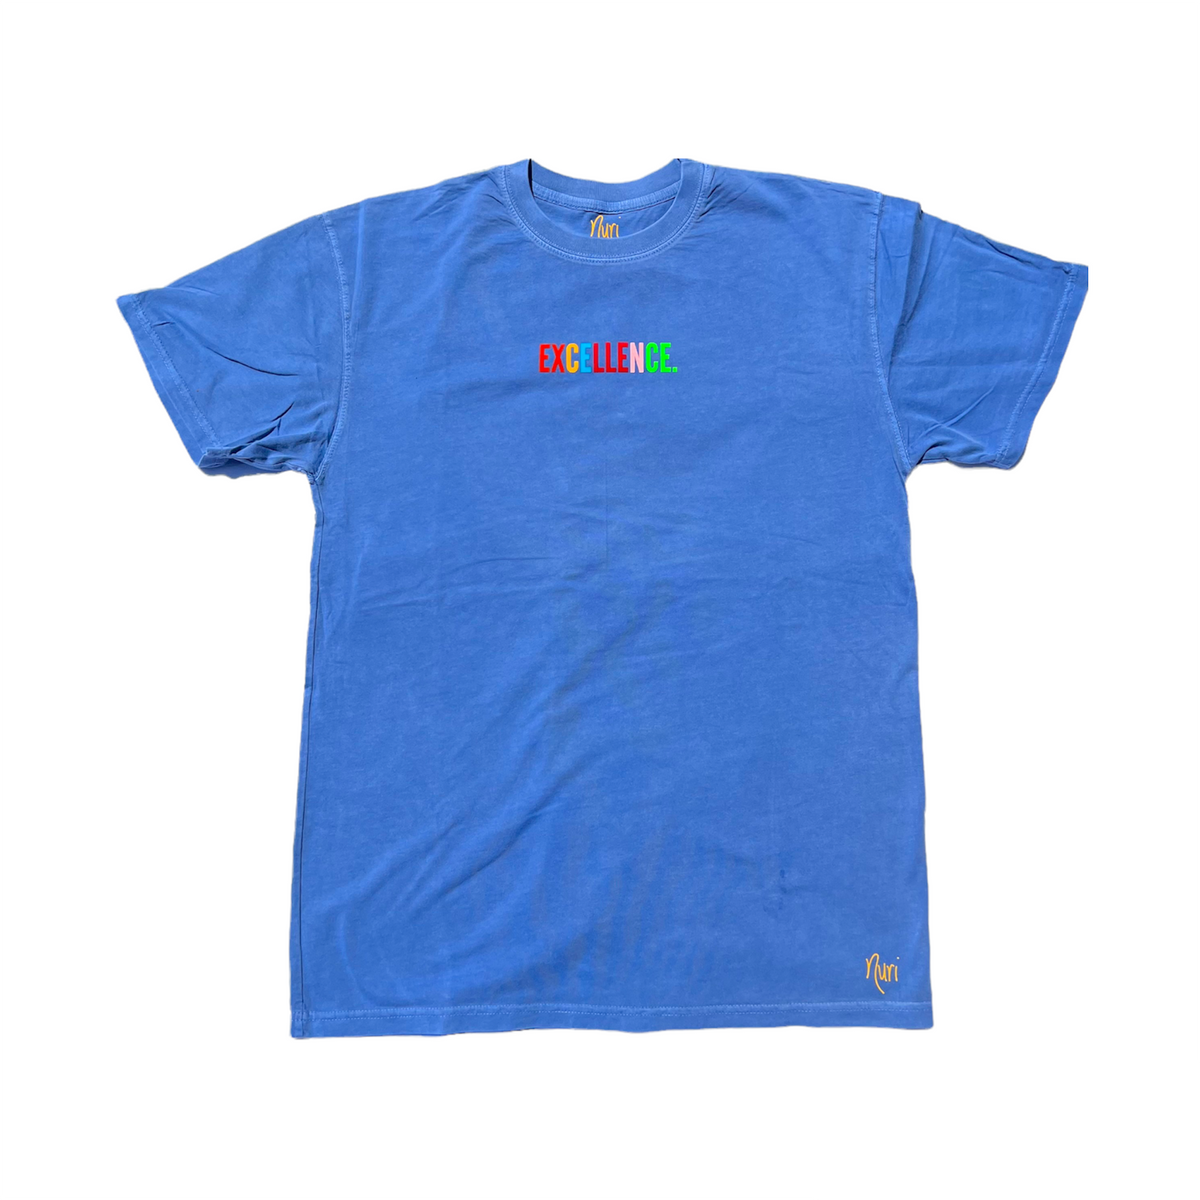 COLORS EXCELLENCE. Nuri – - Designs T-Shirt Blueberry